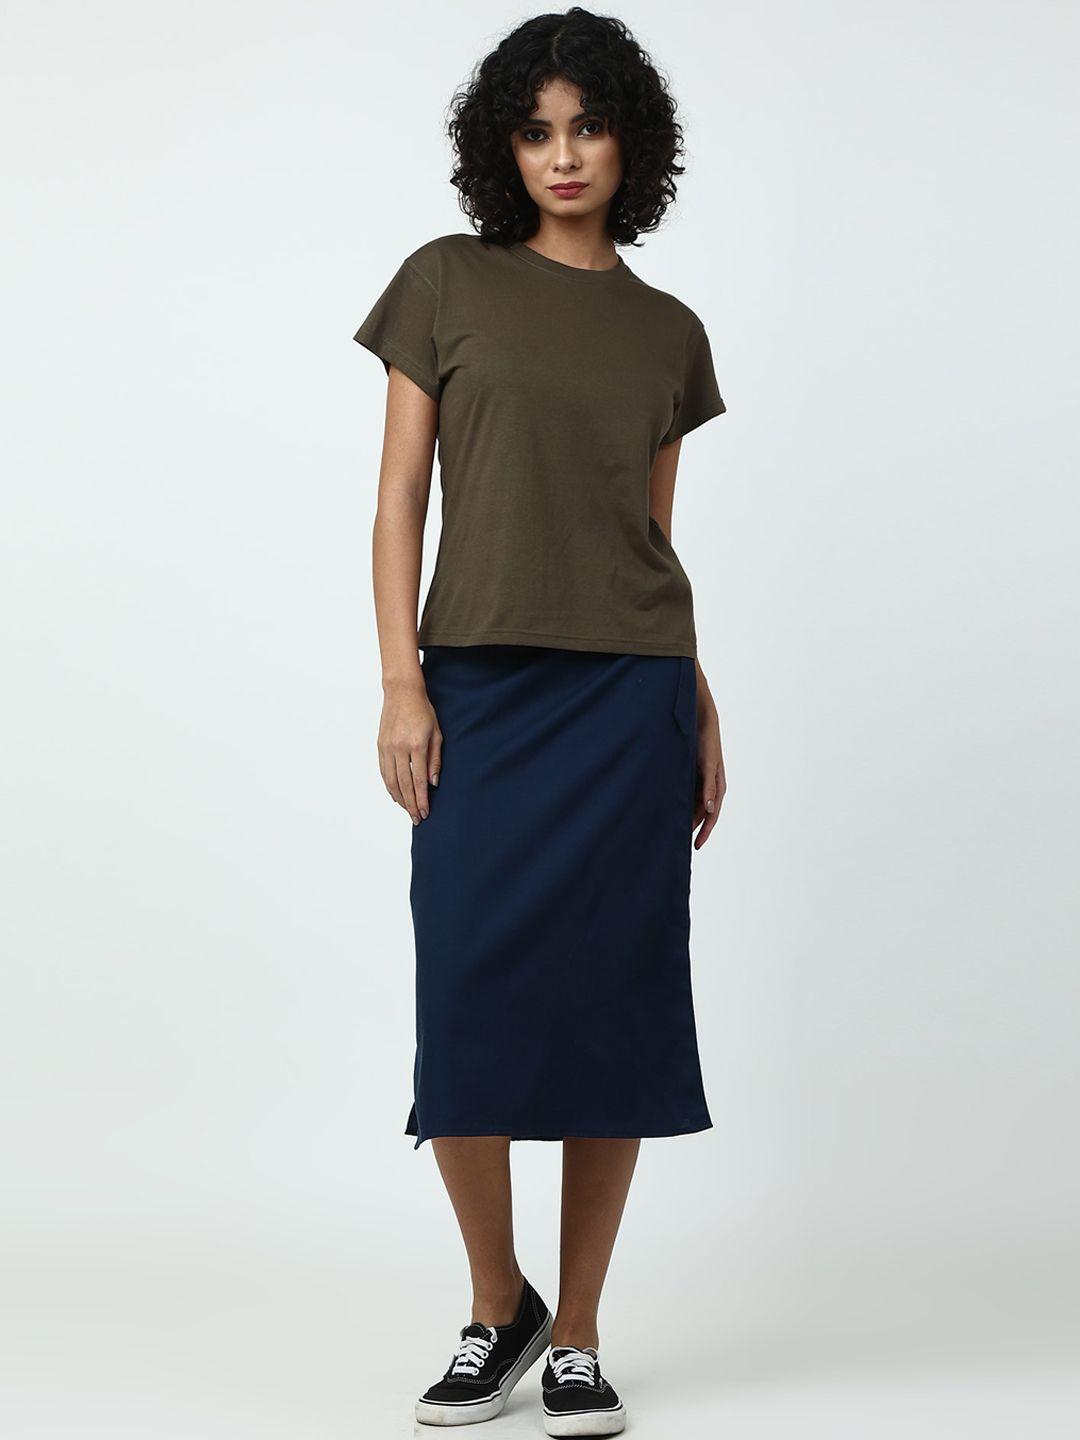 saltpetre round neck short sleeves organic cotton t-shirt with skirt